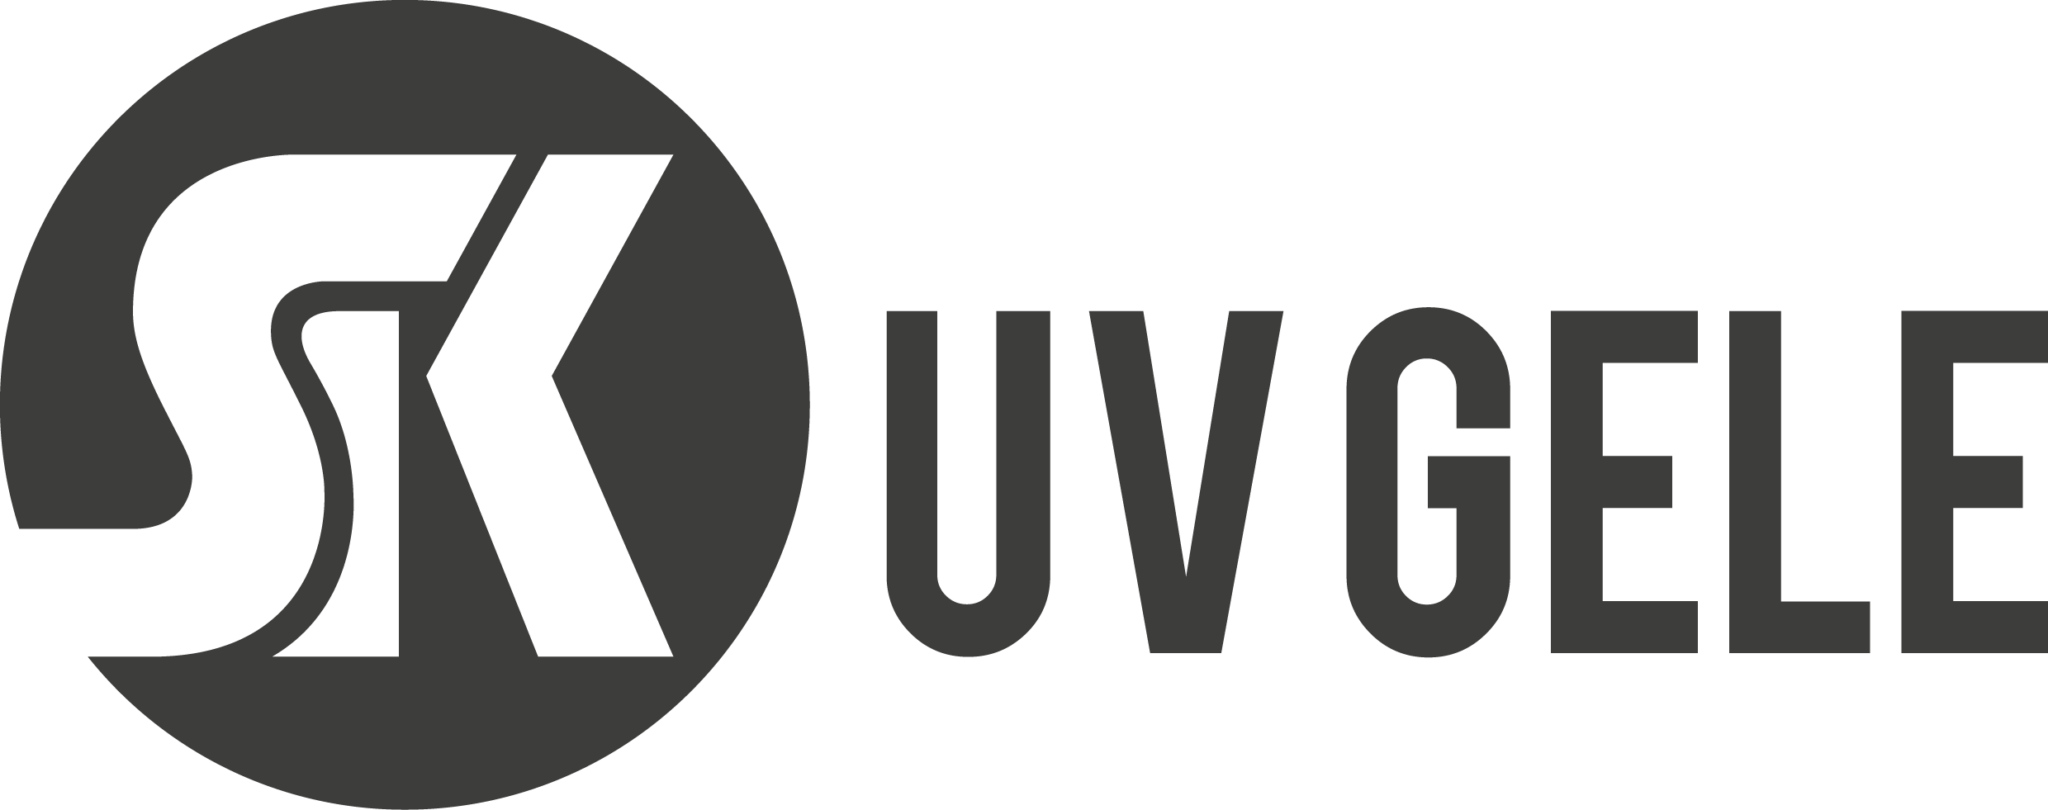 SK UV GELE - Logo